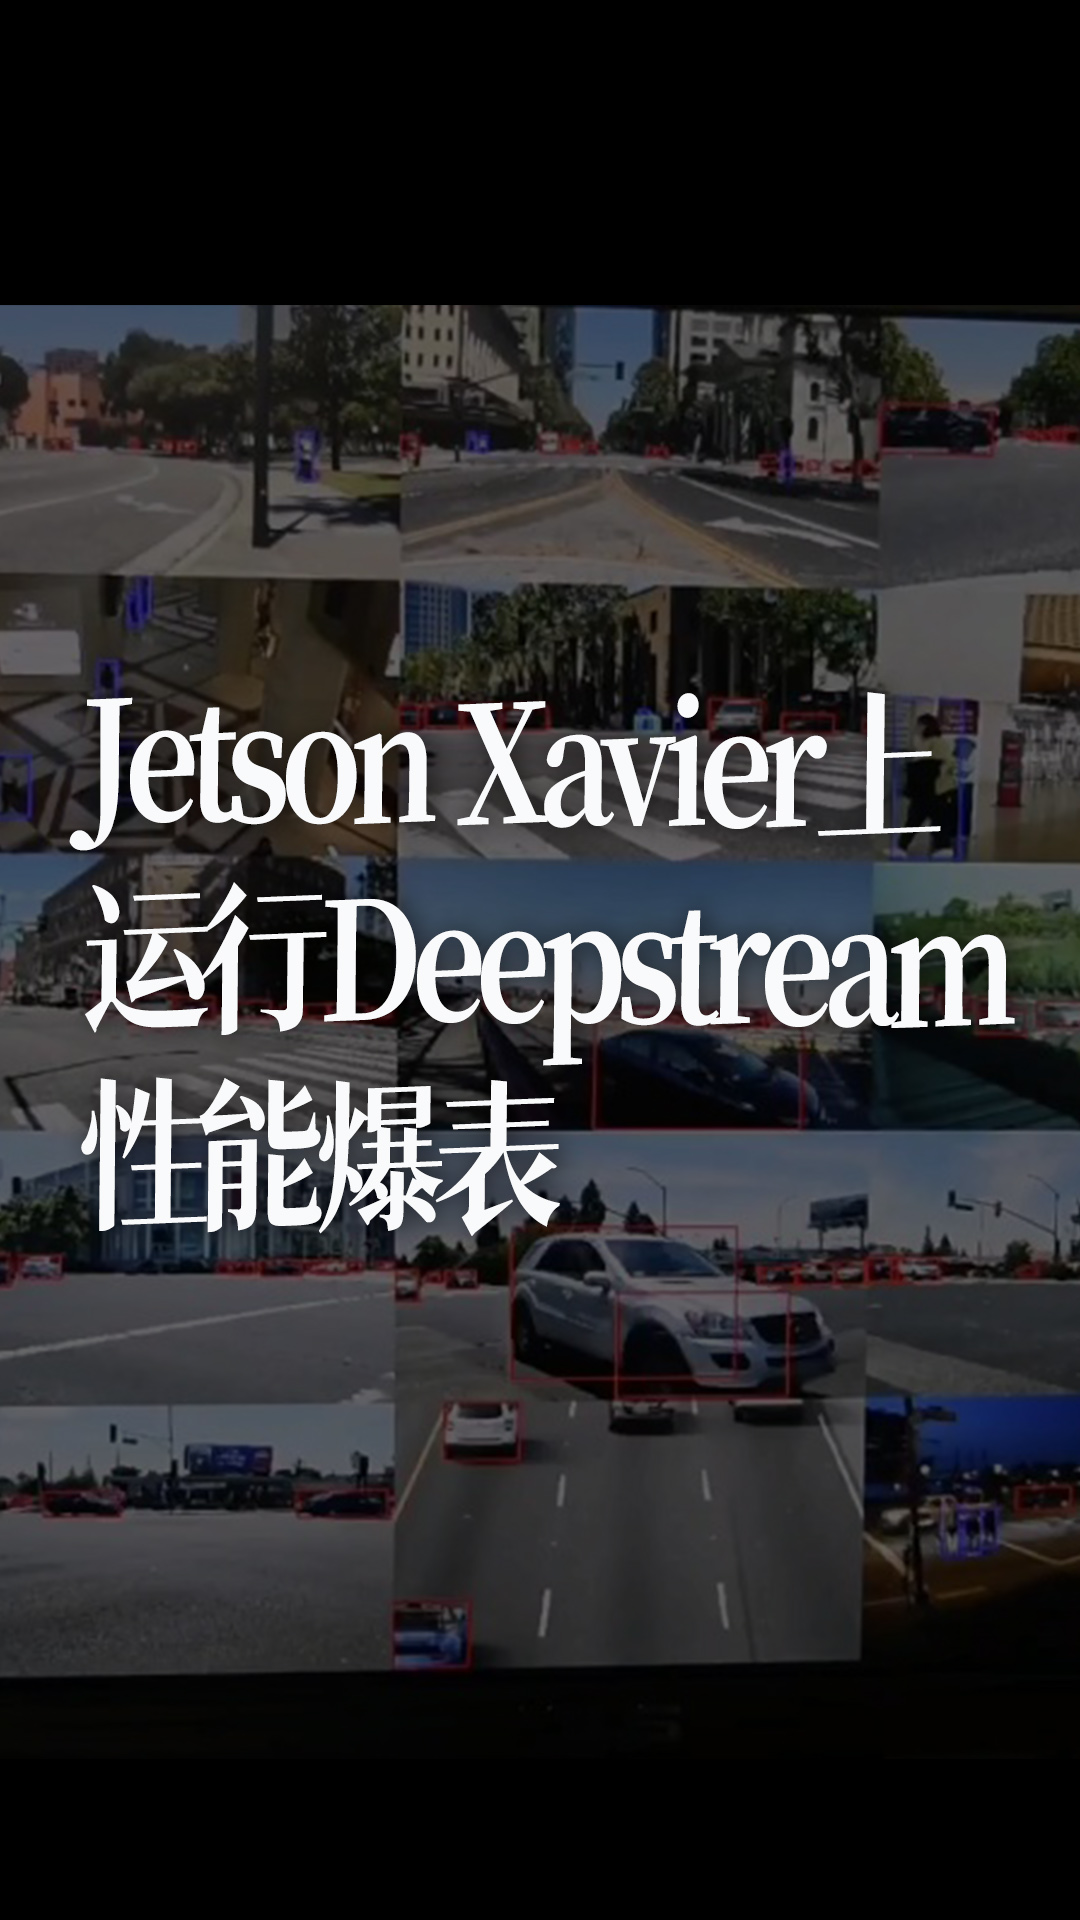 Jetson Xavier上运行Deepstream，性能爆表 